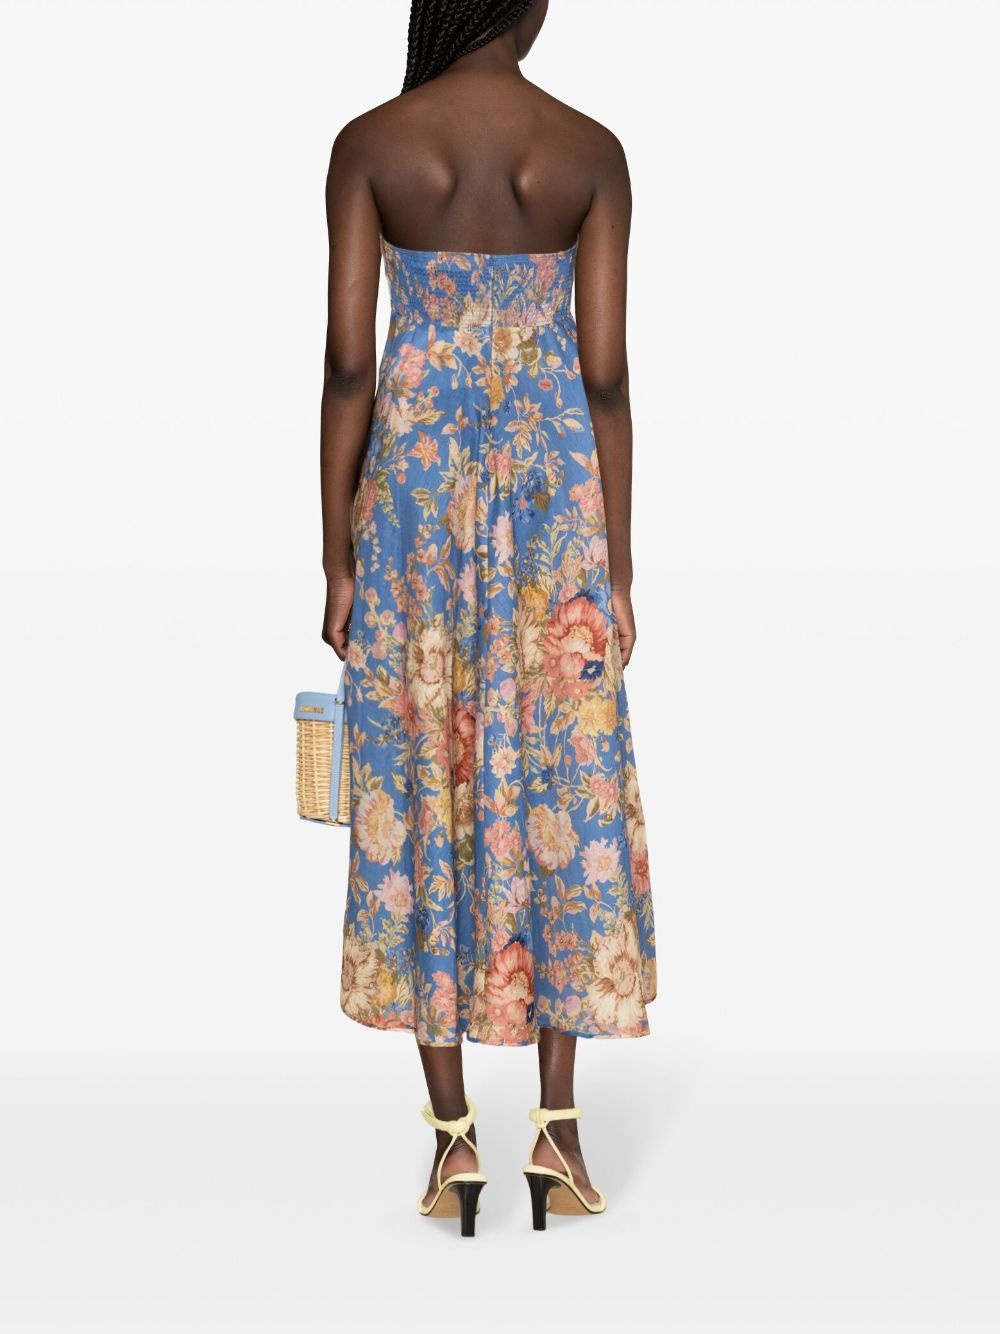 August floral-print strapless dress - 4